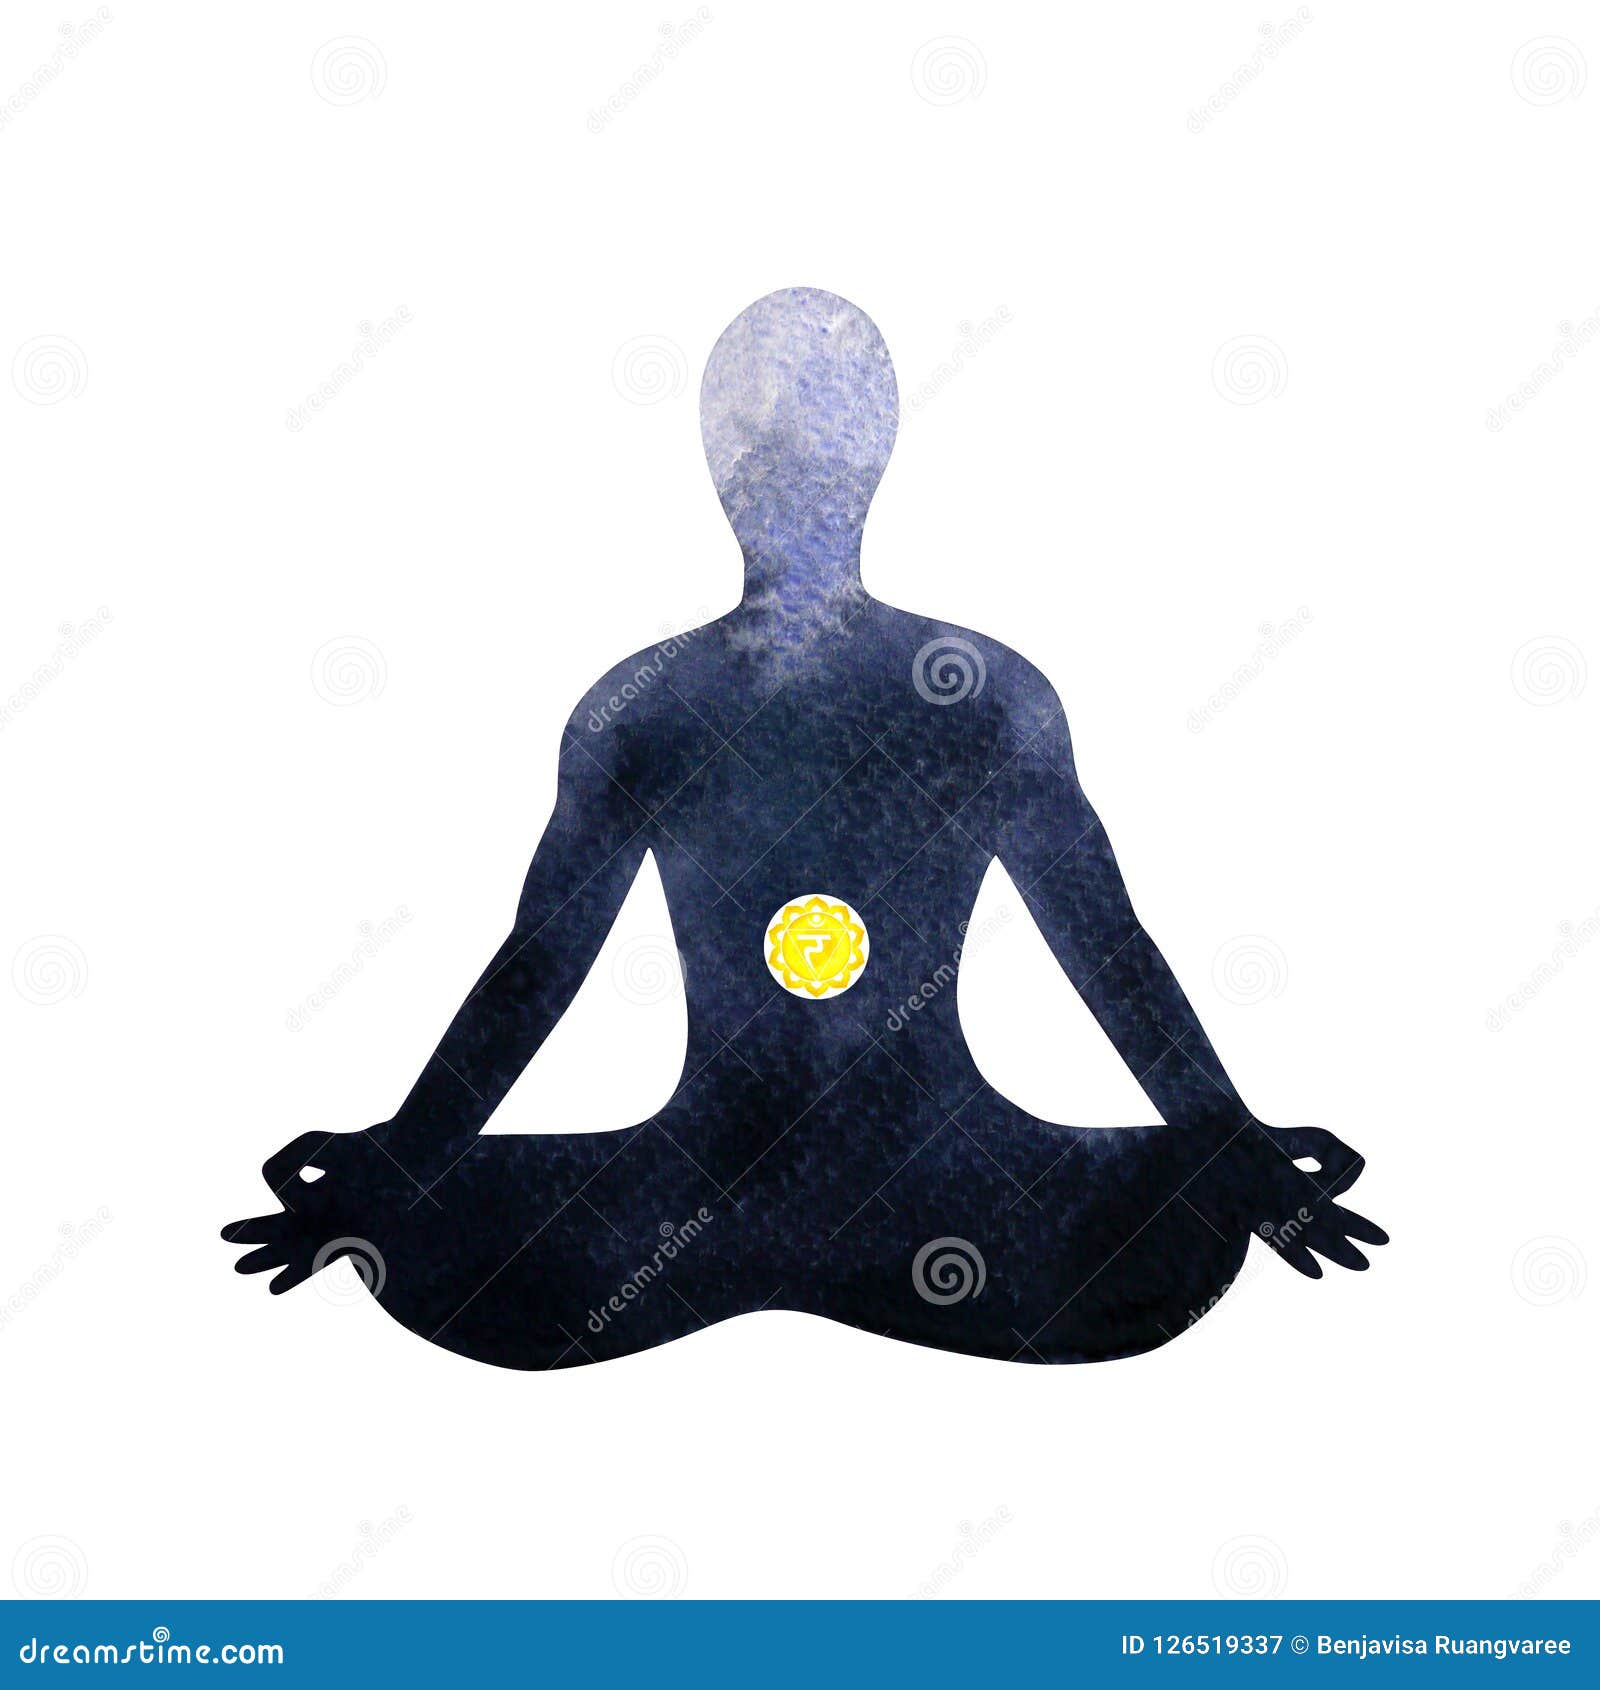 Yoga Chakra Projects :: Photos, videos, logos, illustrations and branding  :: Behance